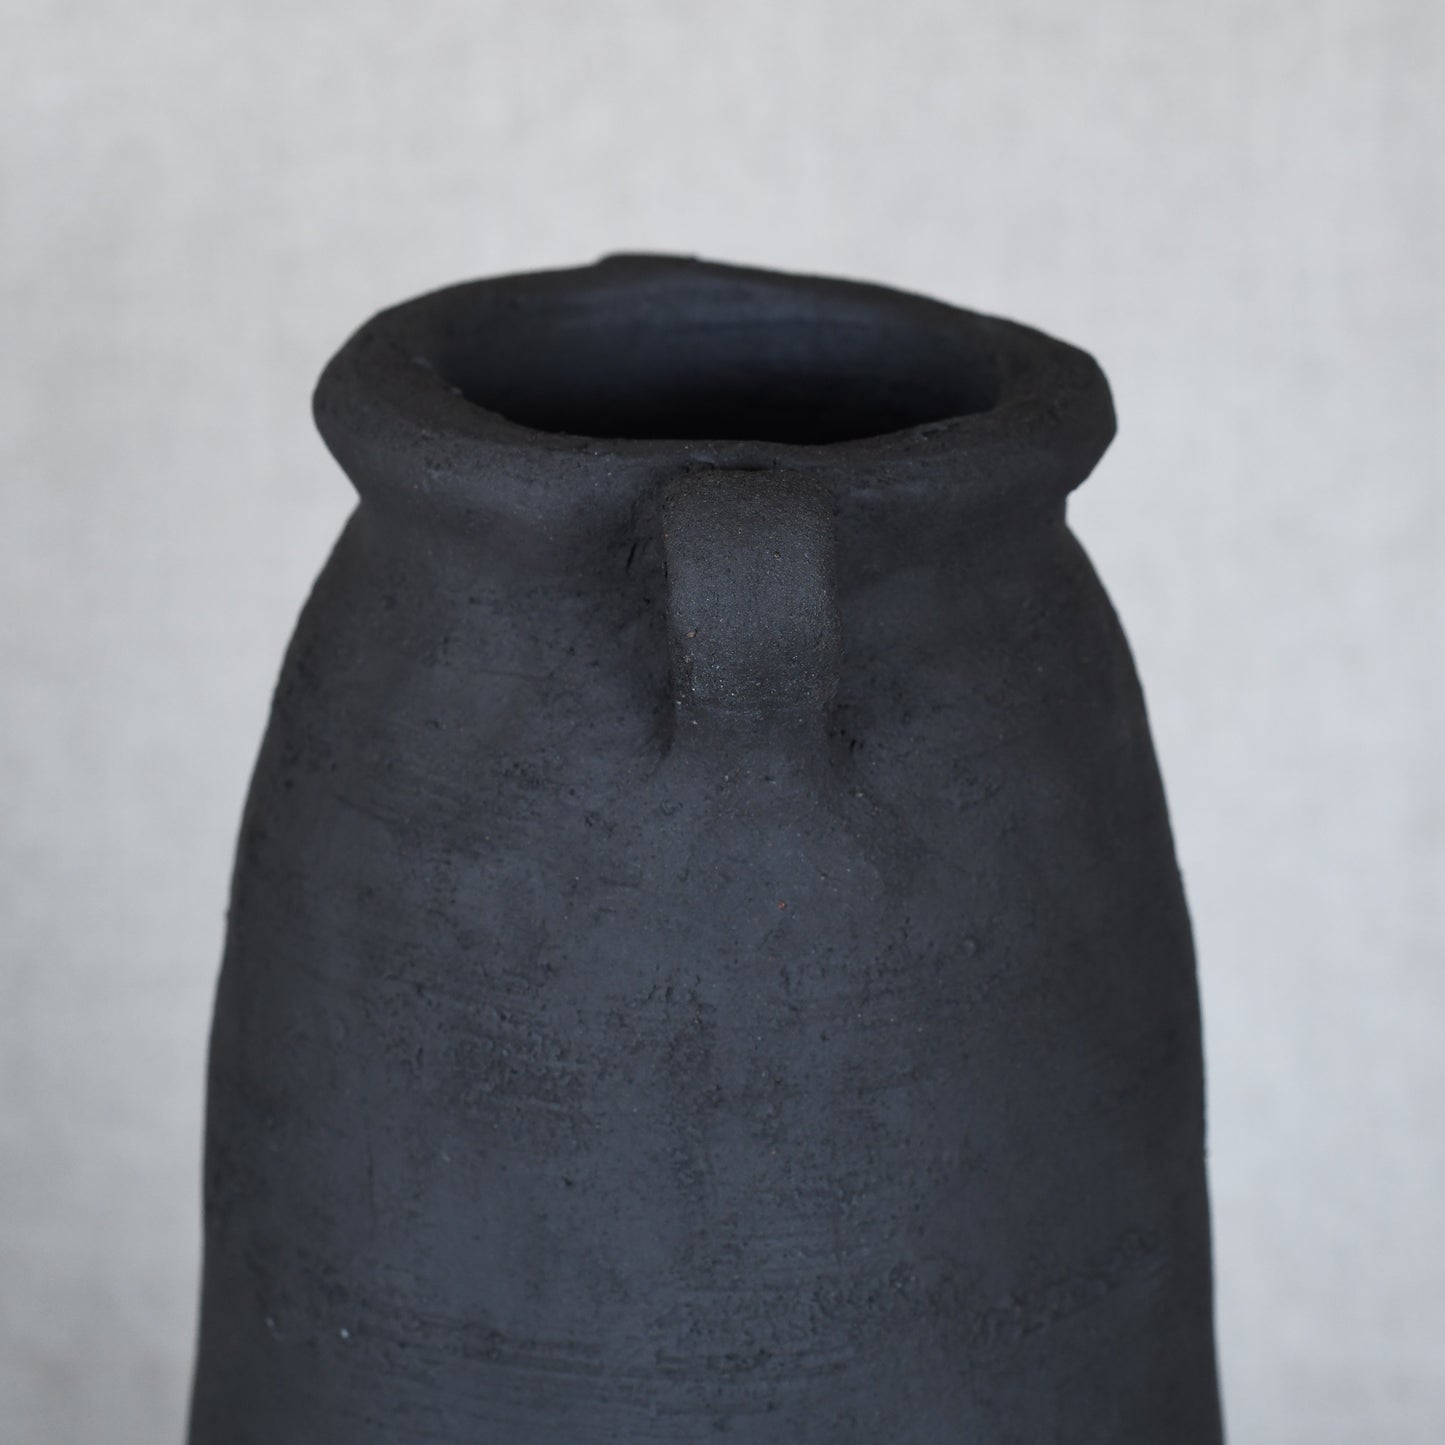 Ringlad urna i i svart lera (28,5 cm)